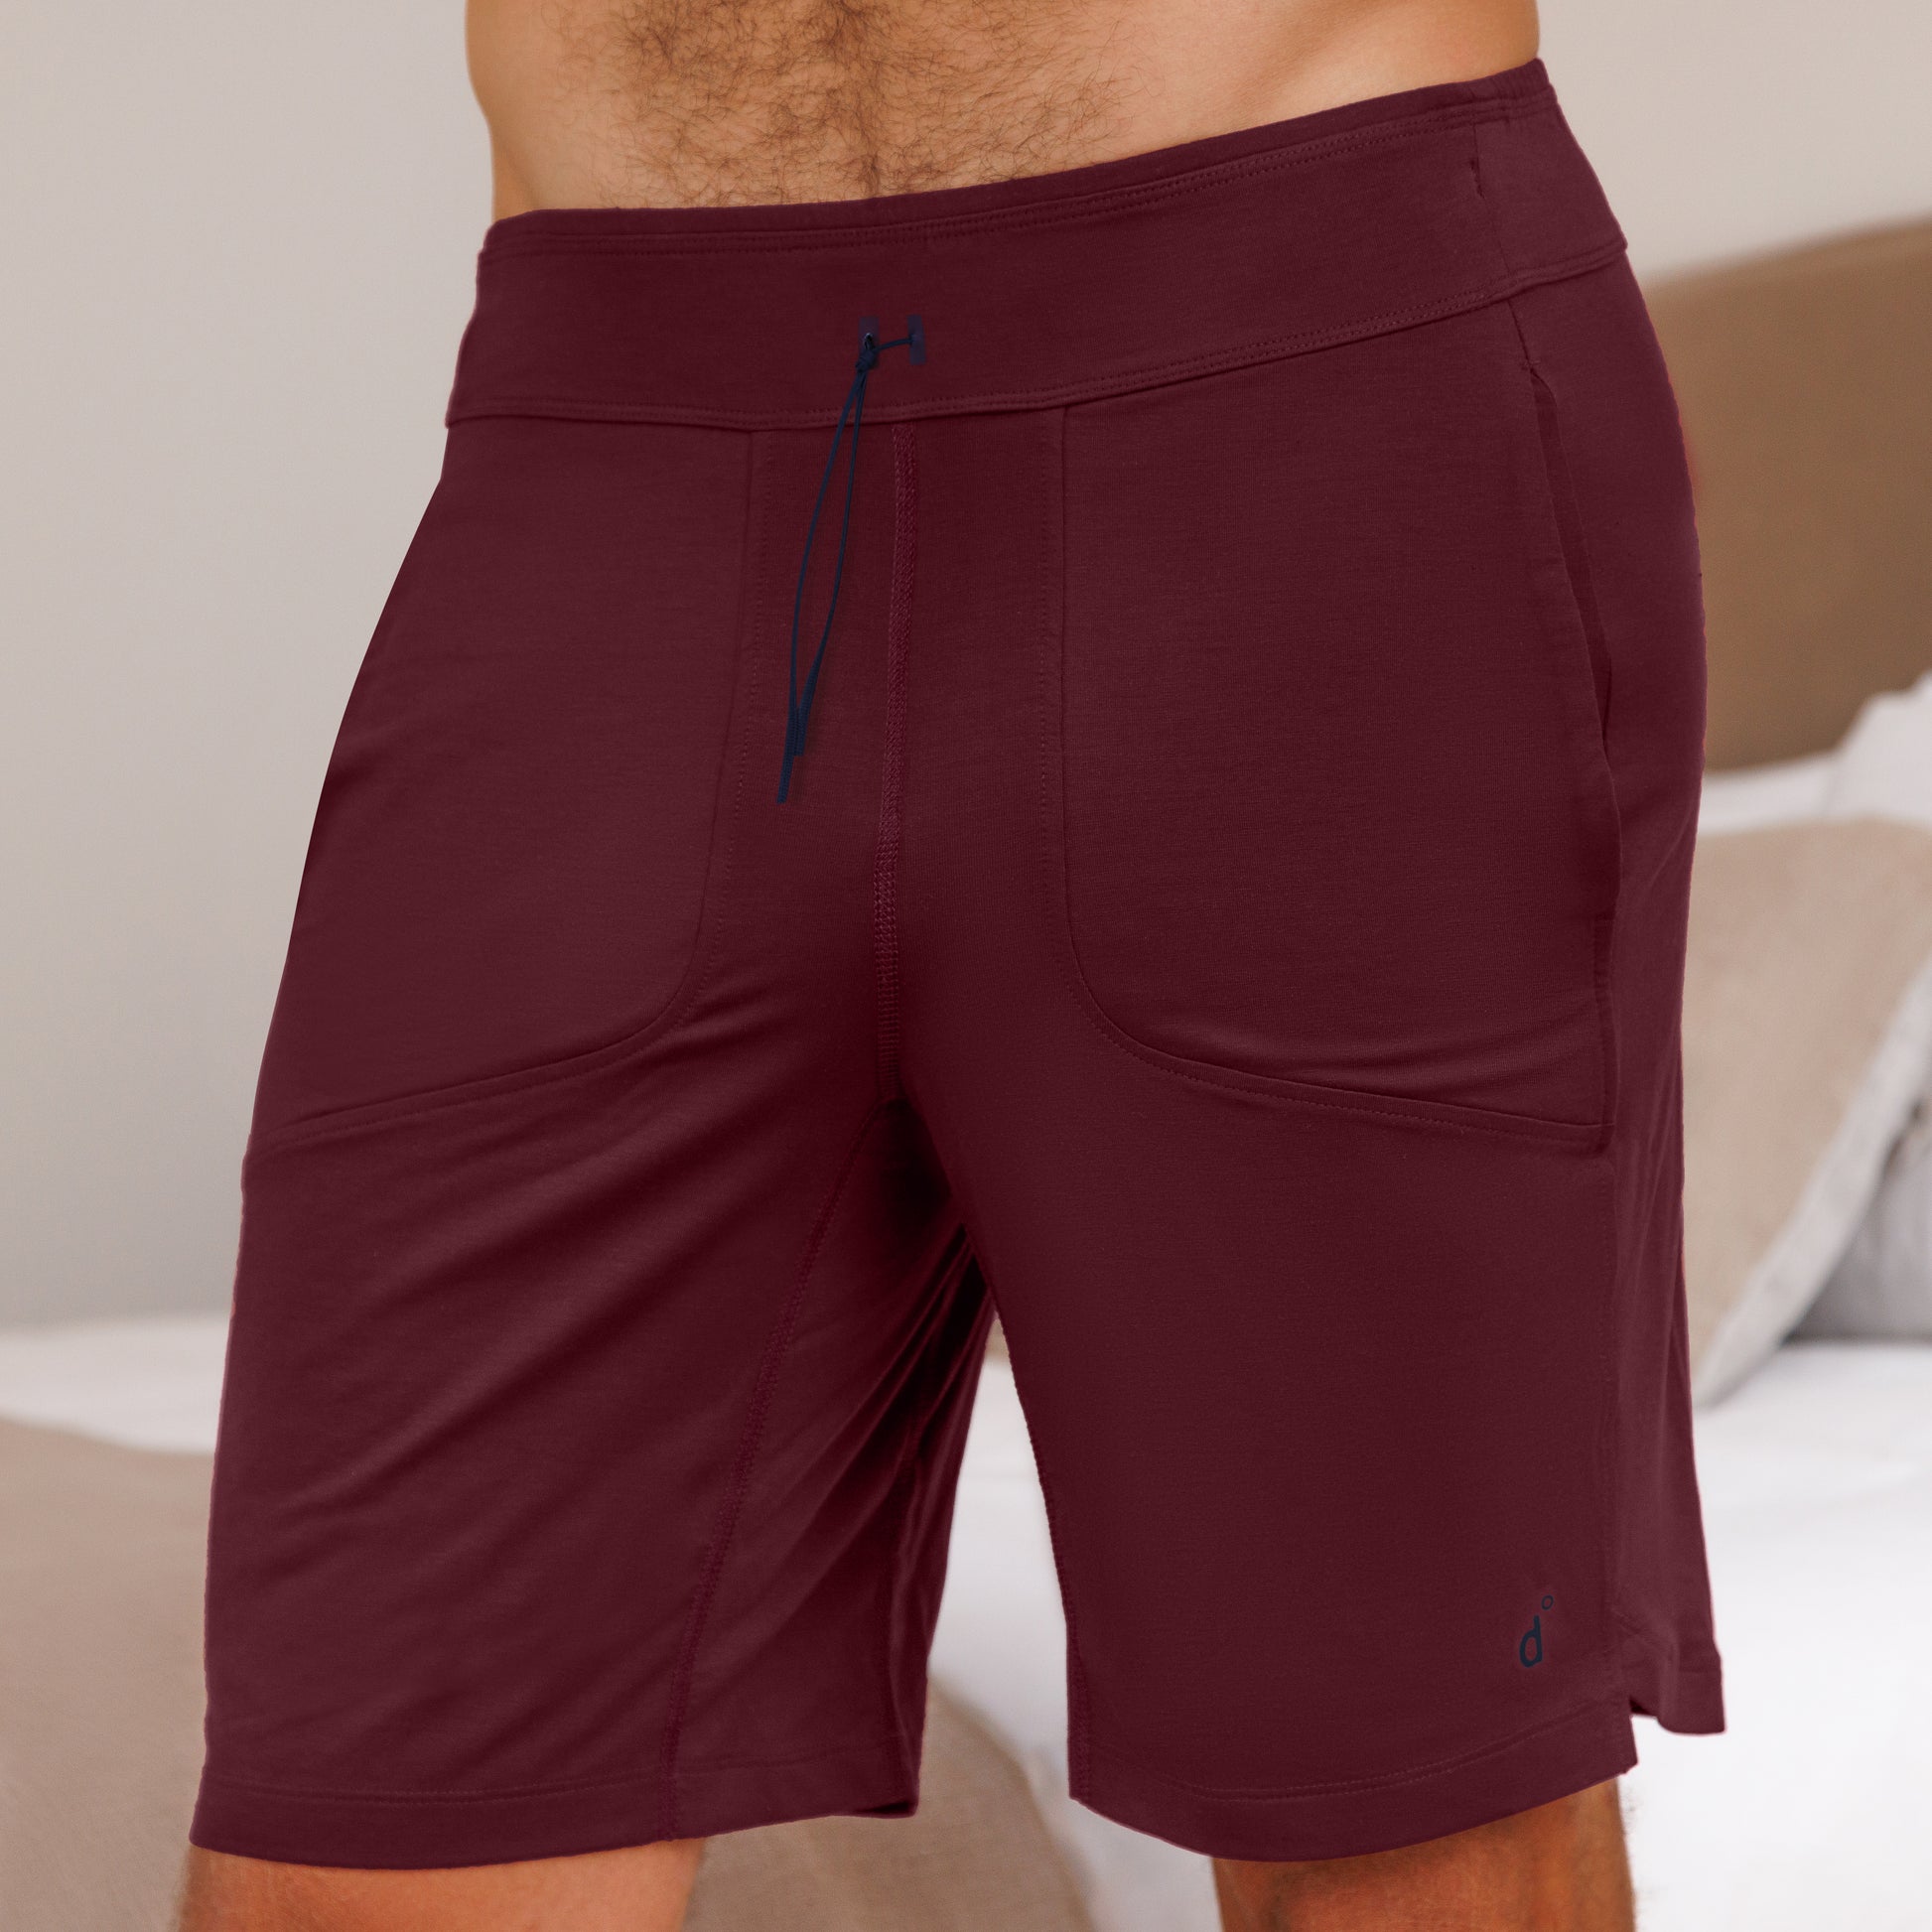 Muscle recovery sleep shorts men || Burgundy